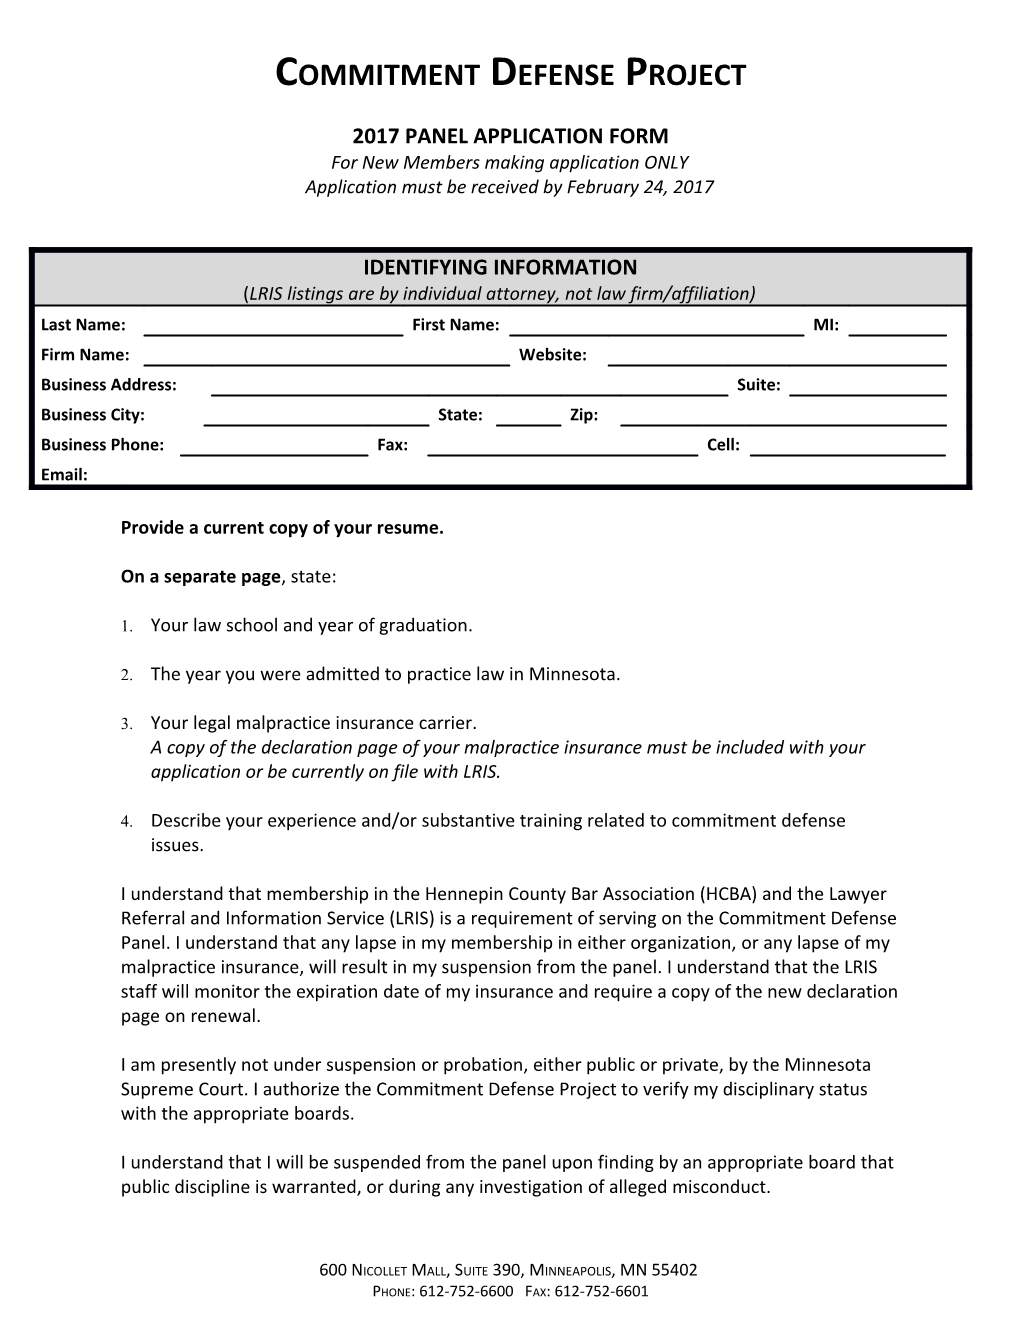 2017Panel Application Form